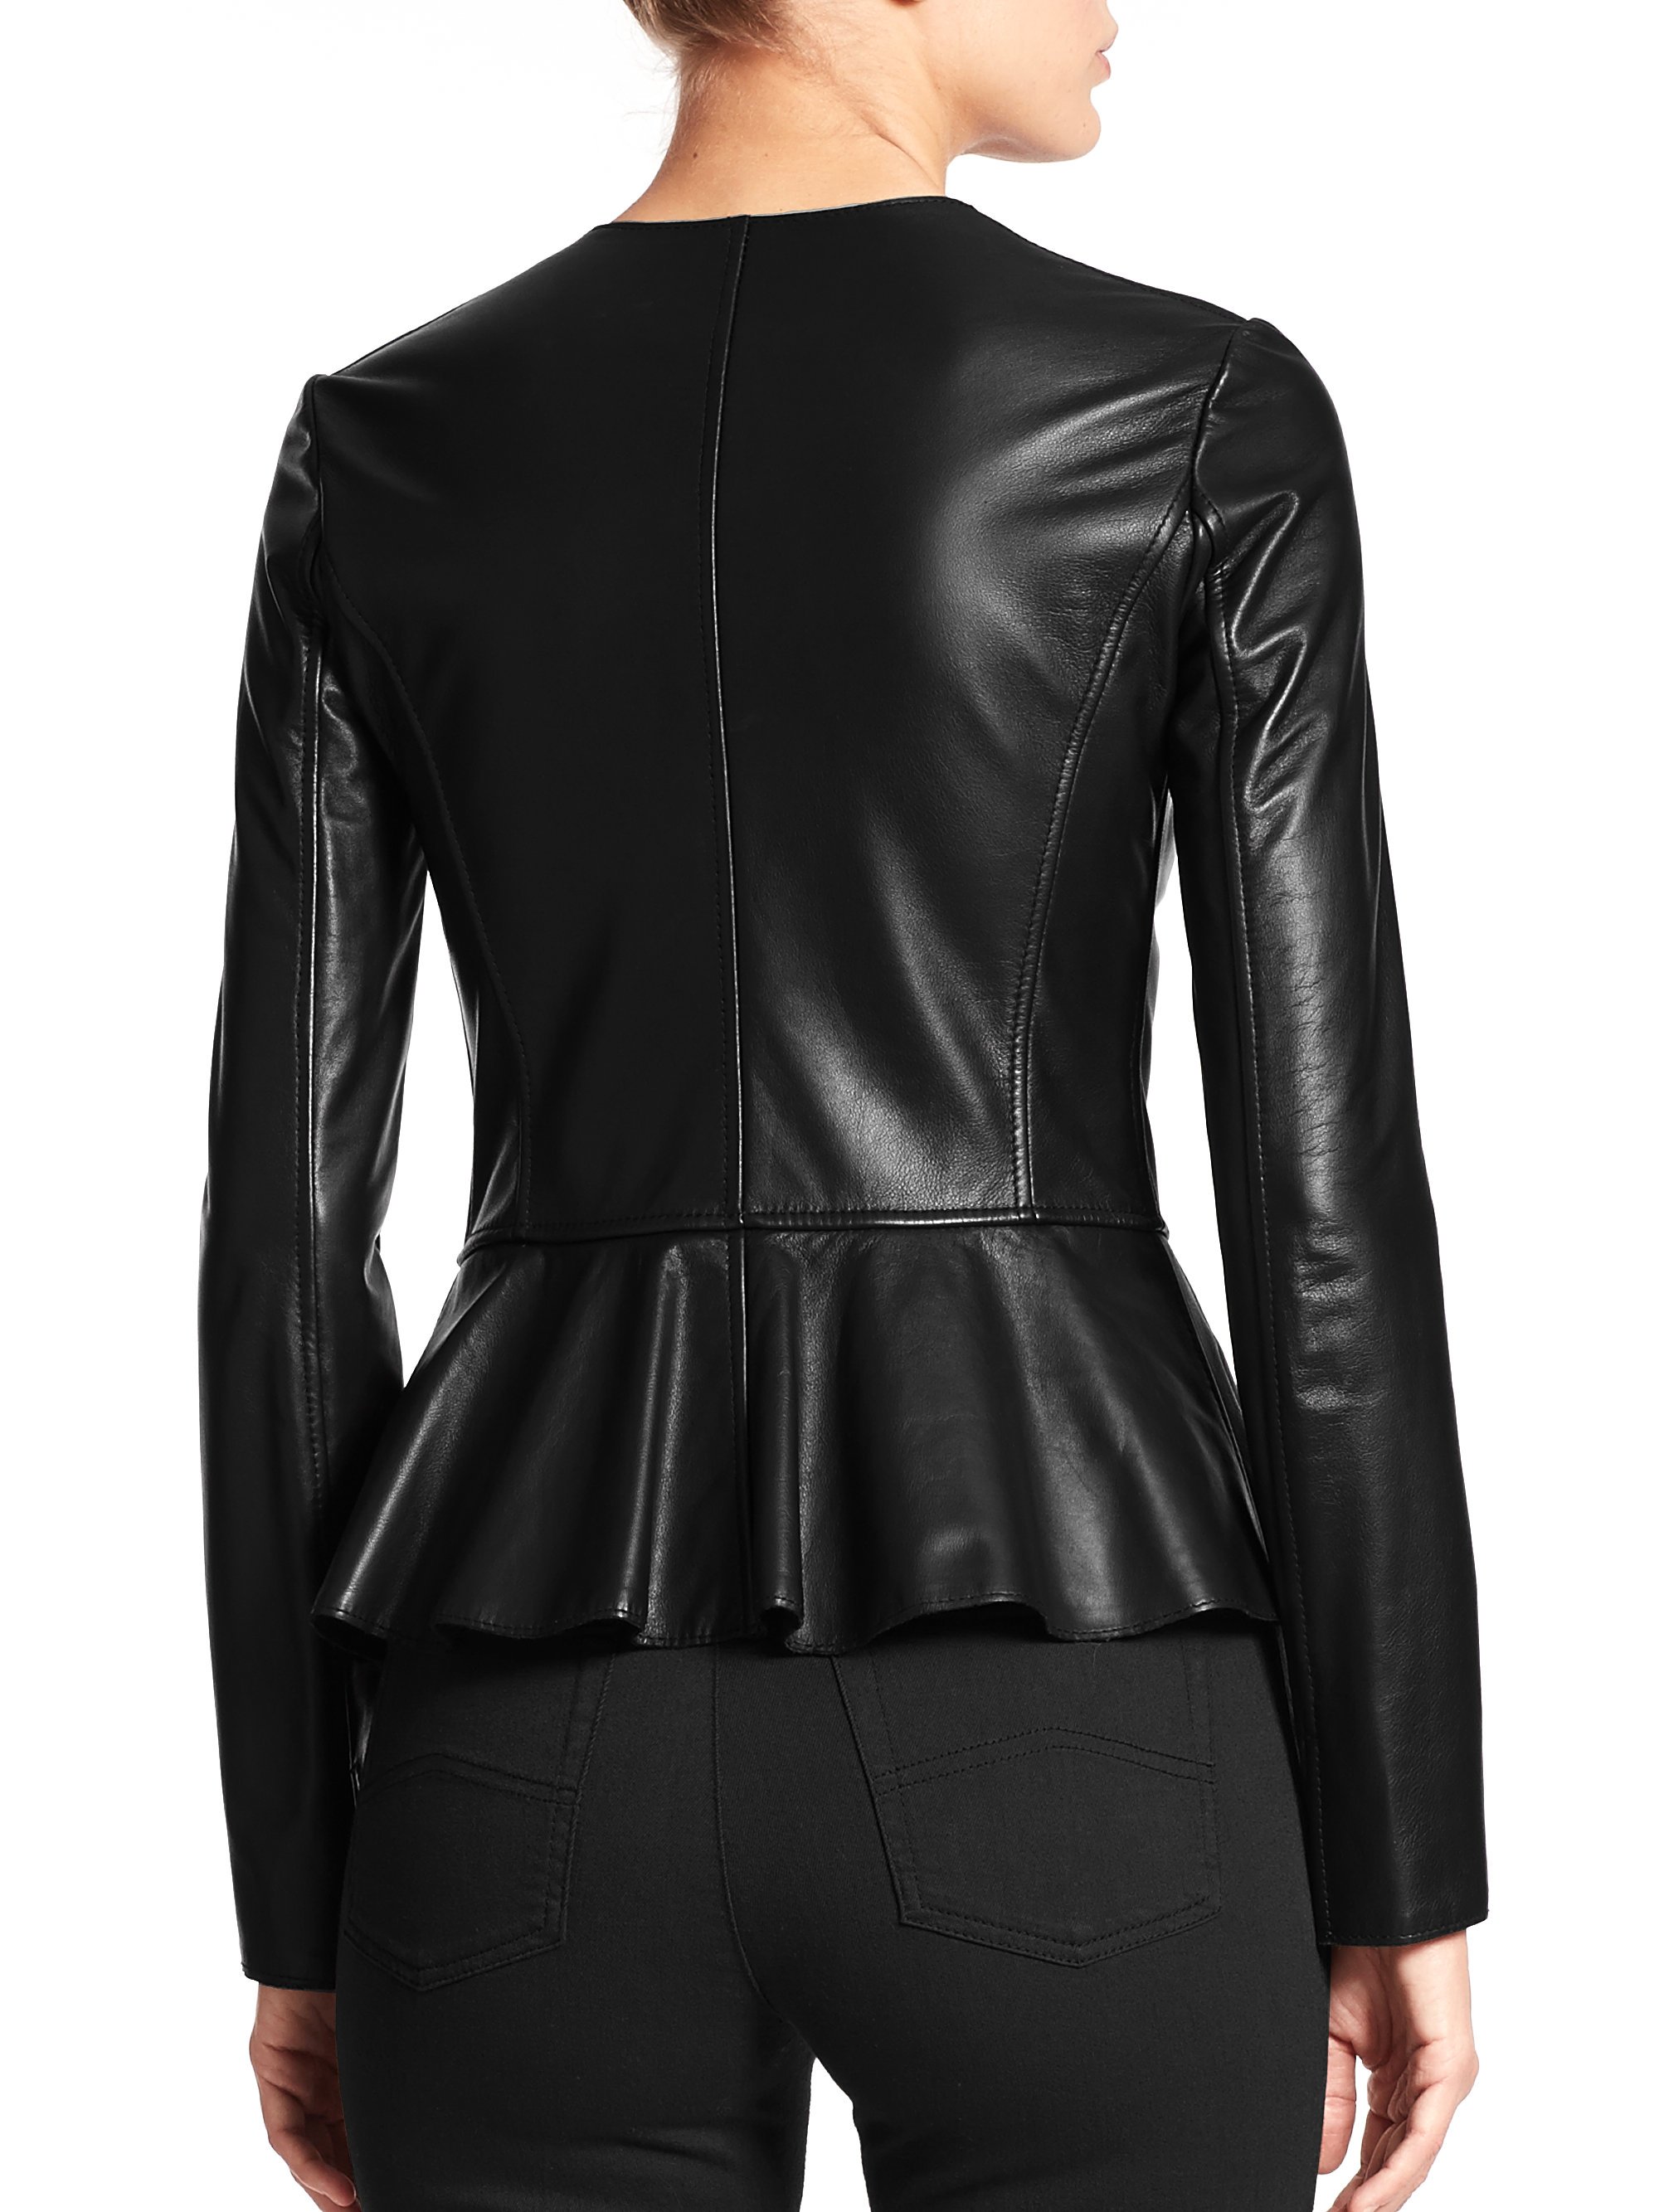 Ladies Black Leather Biker Jacket by Radford Leathers